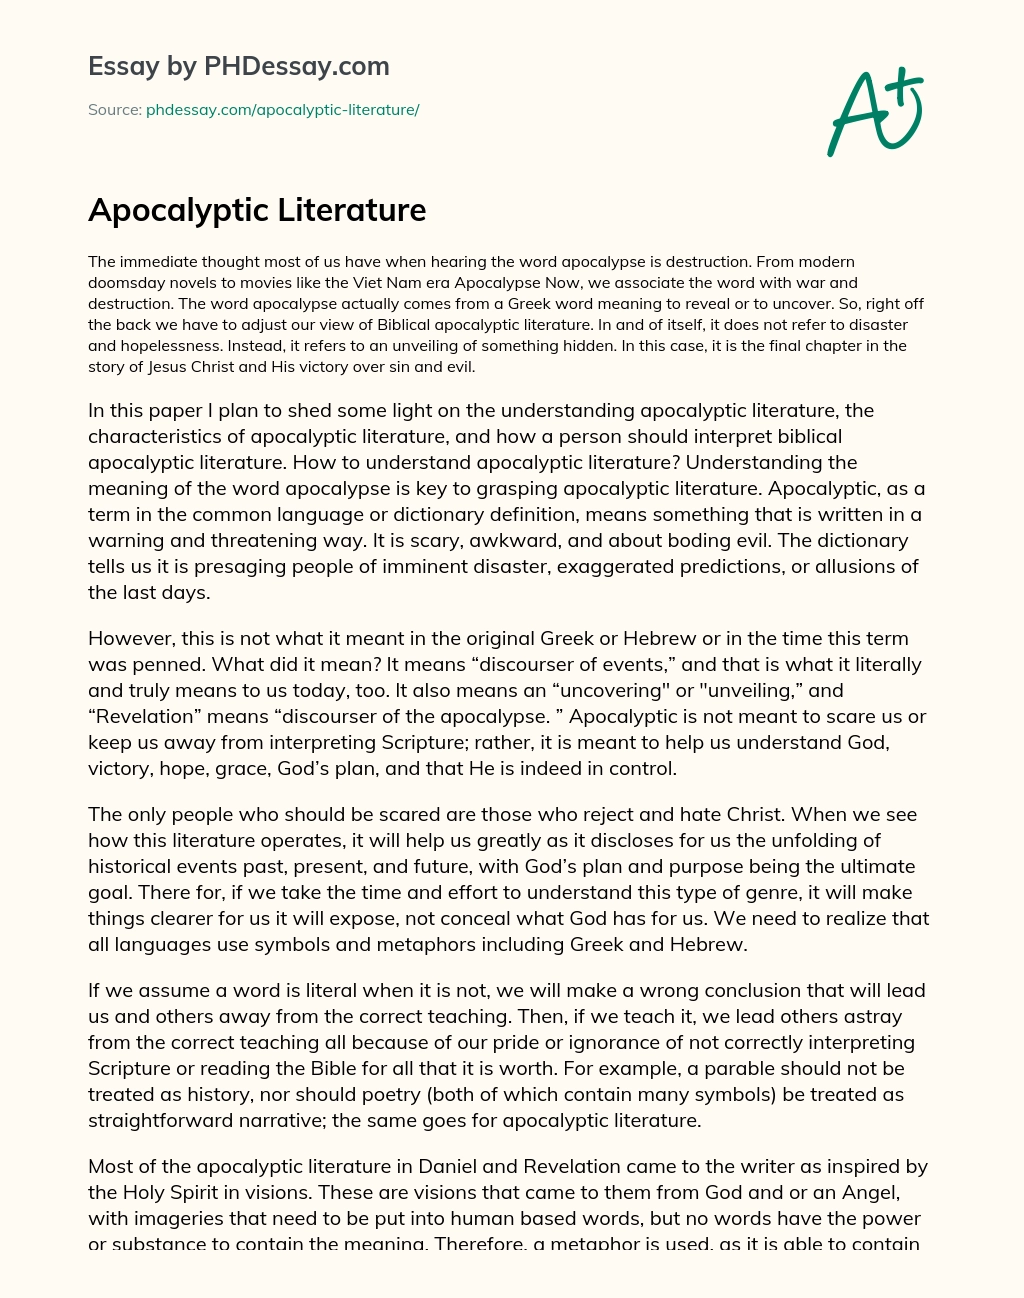 Apocalyptic Literature essay